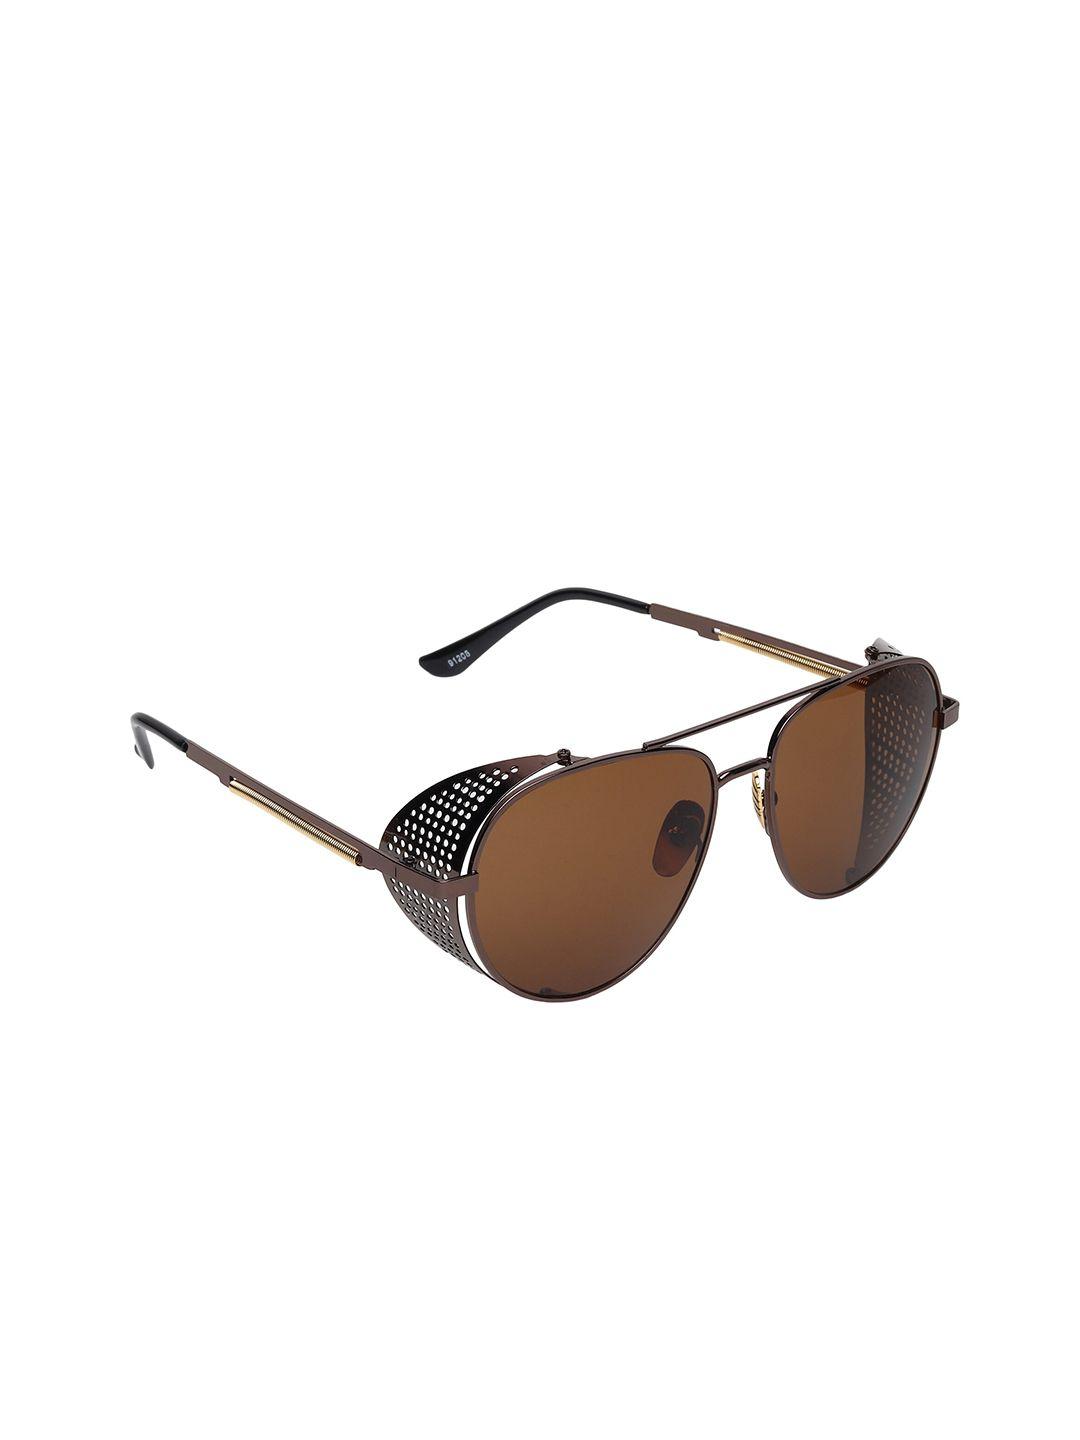 swiss design other sunglasses full rim with uv protected lens sdsg-91208-02